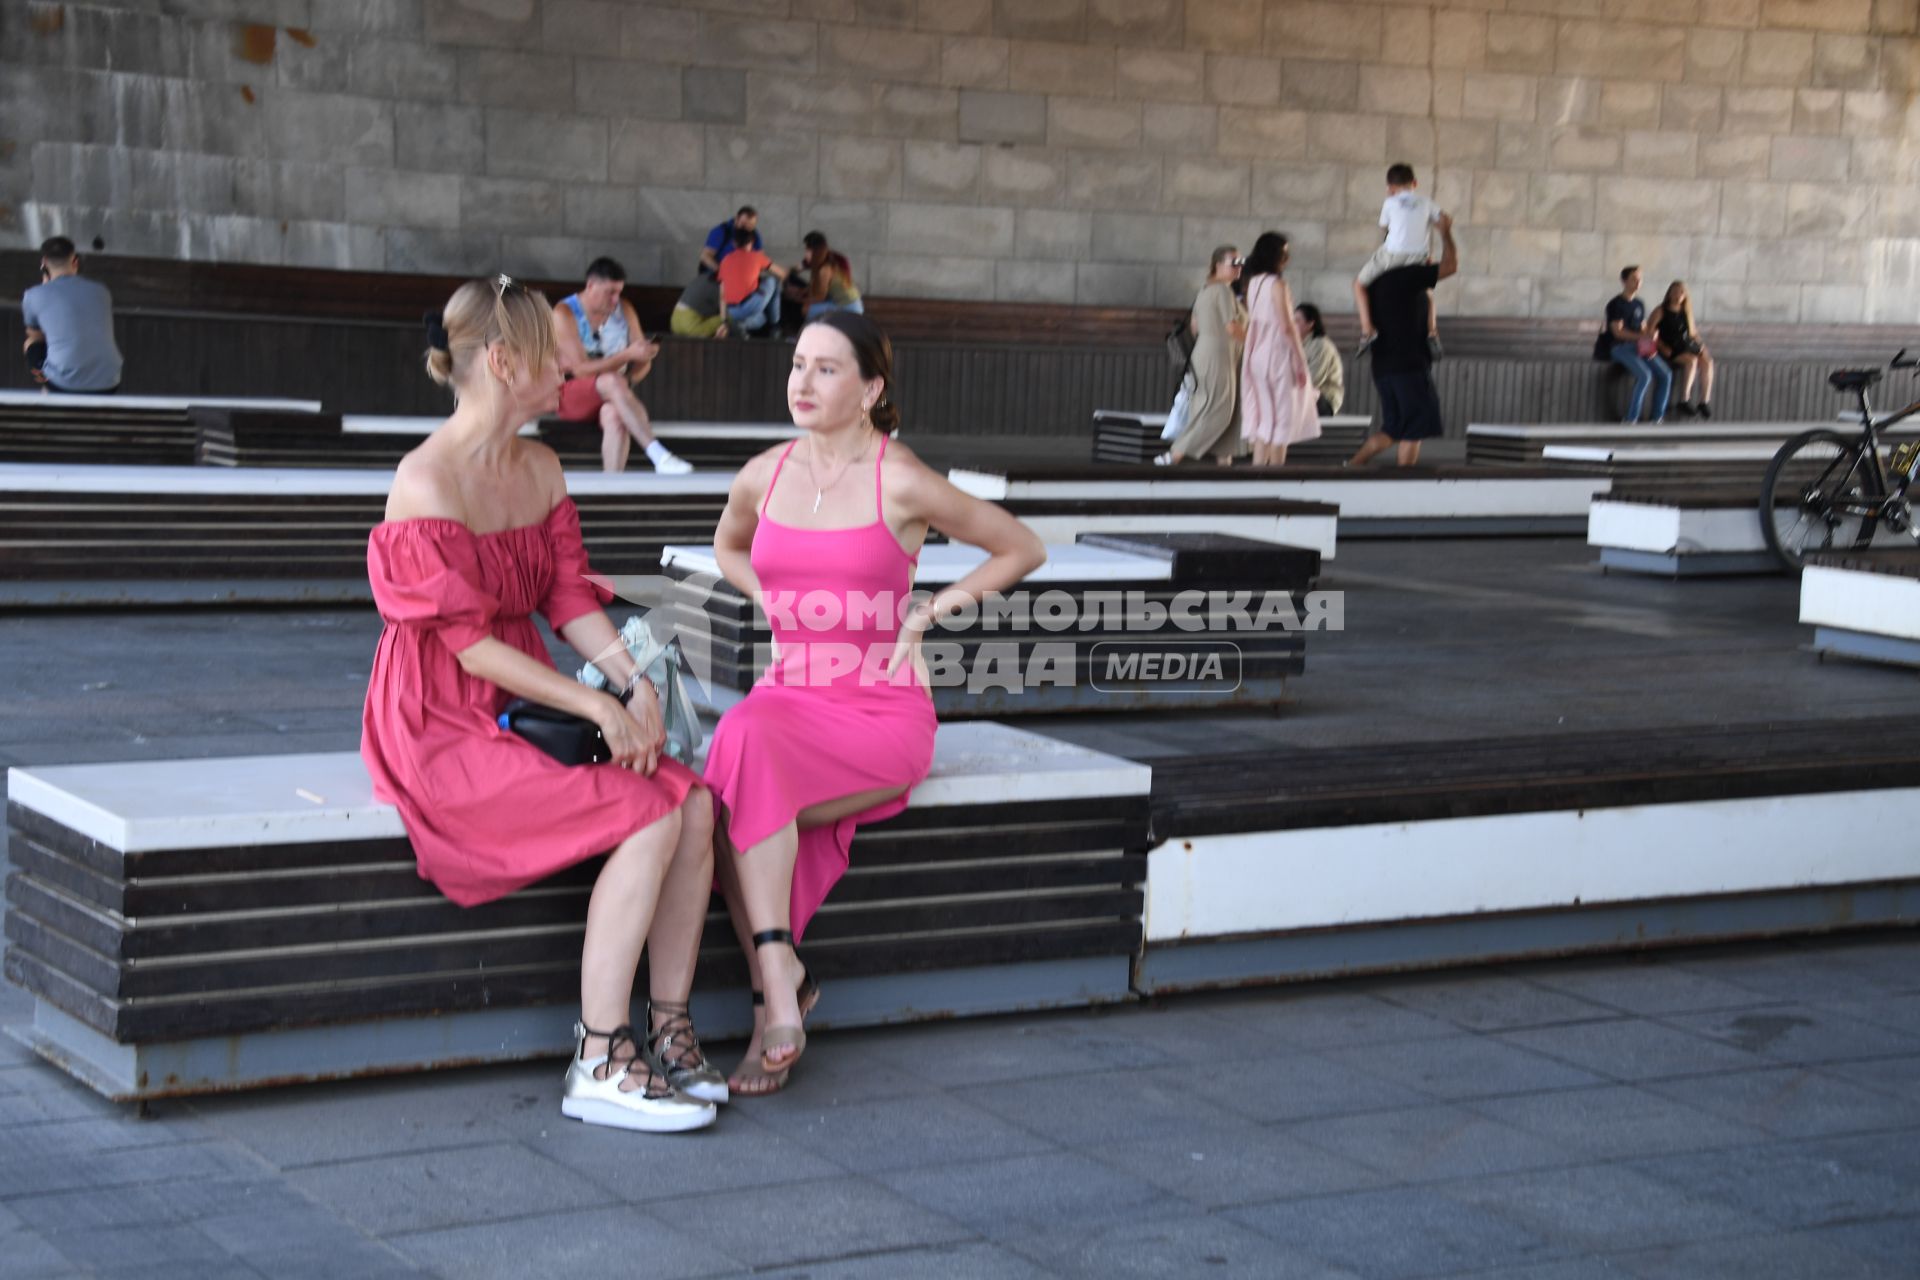 Москва.   Девушки отдыхают на скамейке.